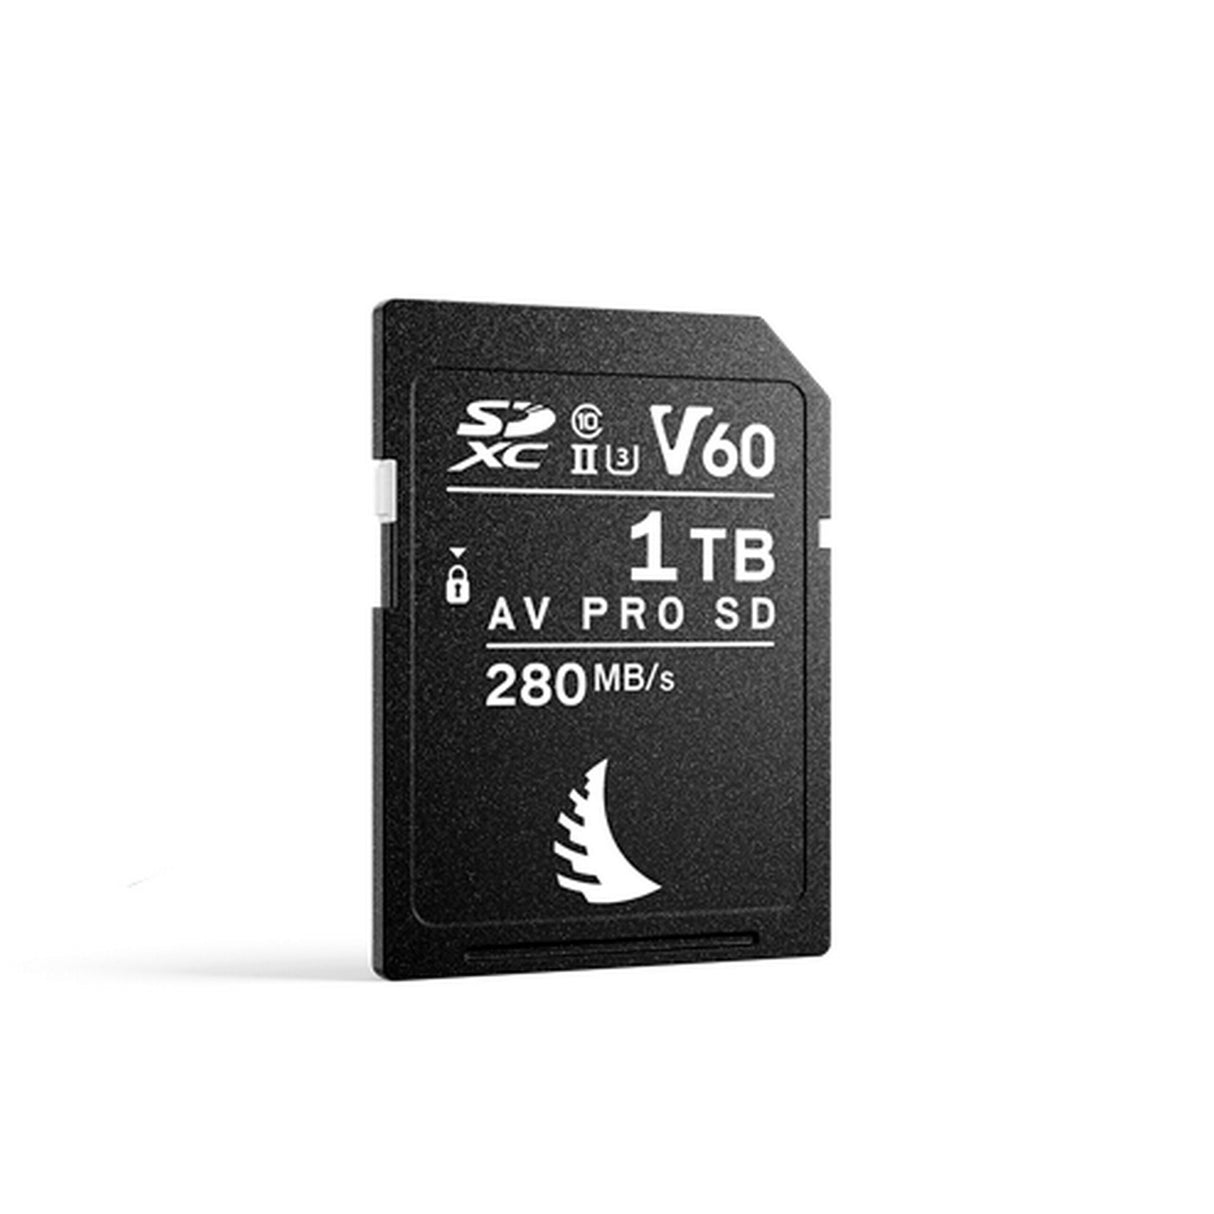 Angelbird AV PRO SD MK2 V60 SDXC UHS-II Memory Card, 1TB